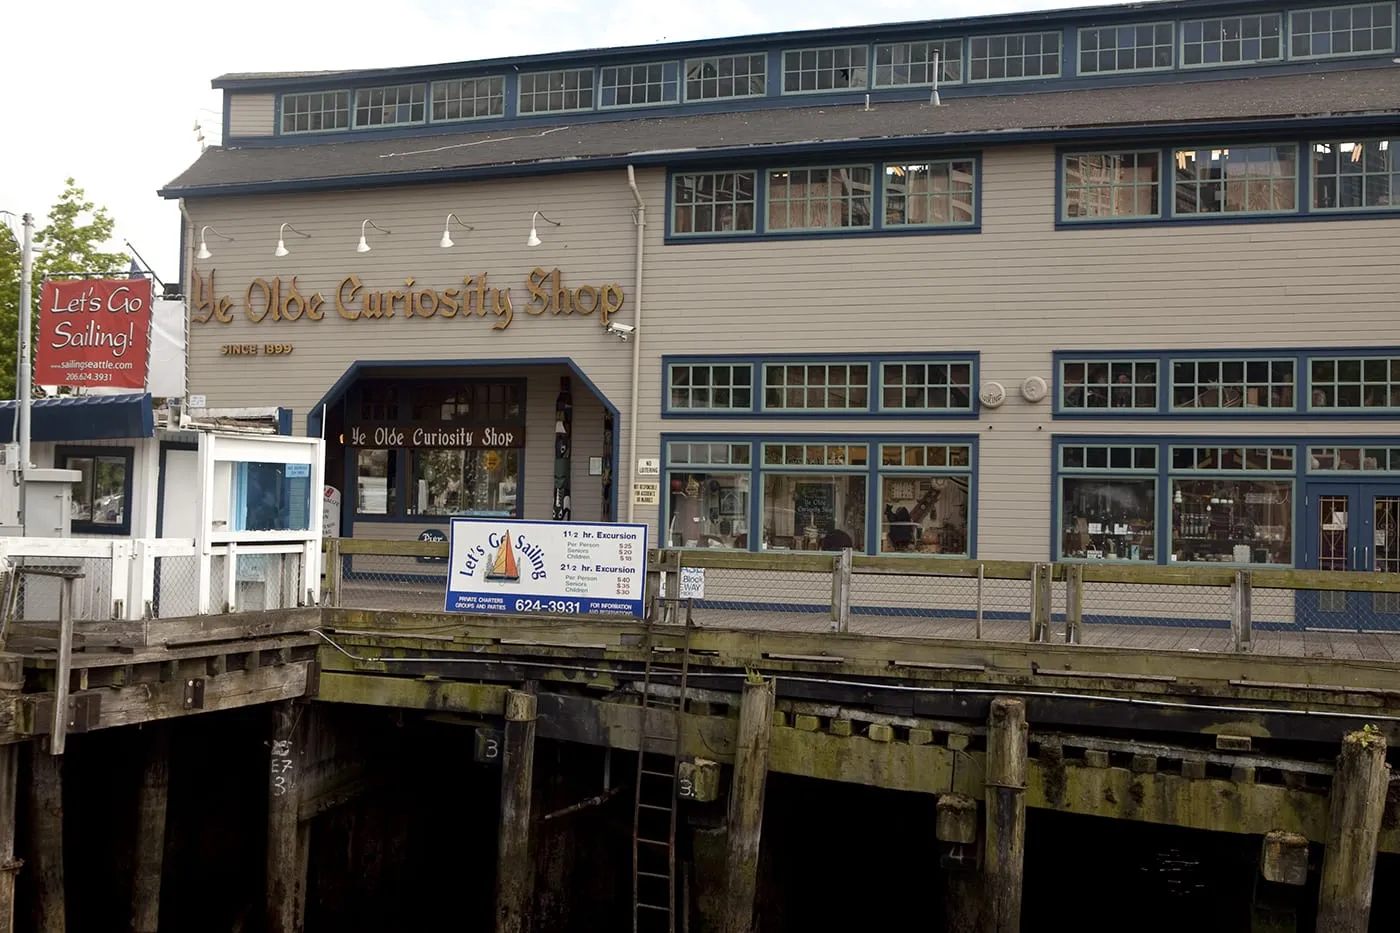 Ye Olde Curiosity Shoppe in Seattle, Washington